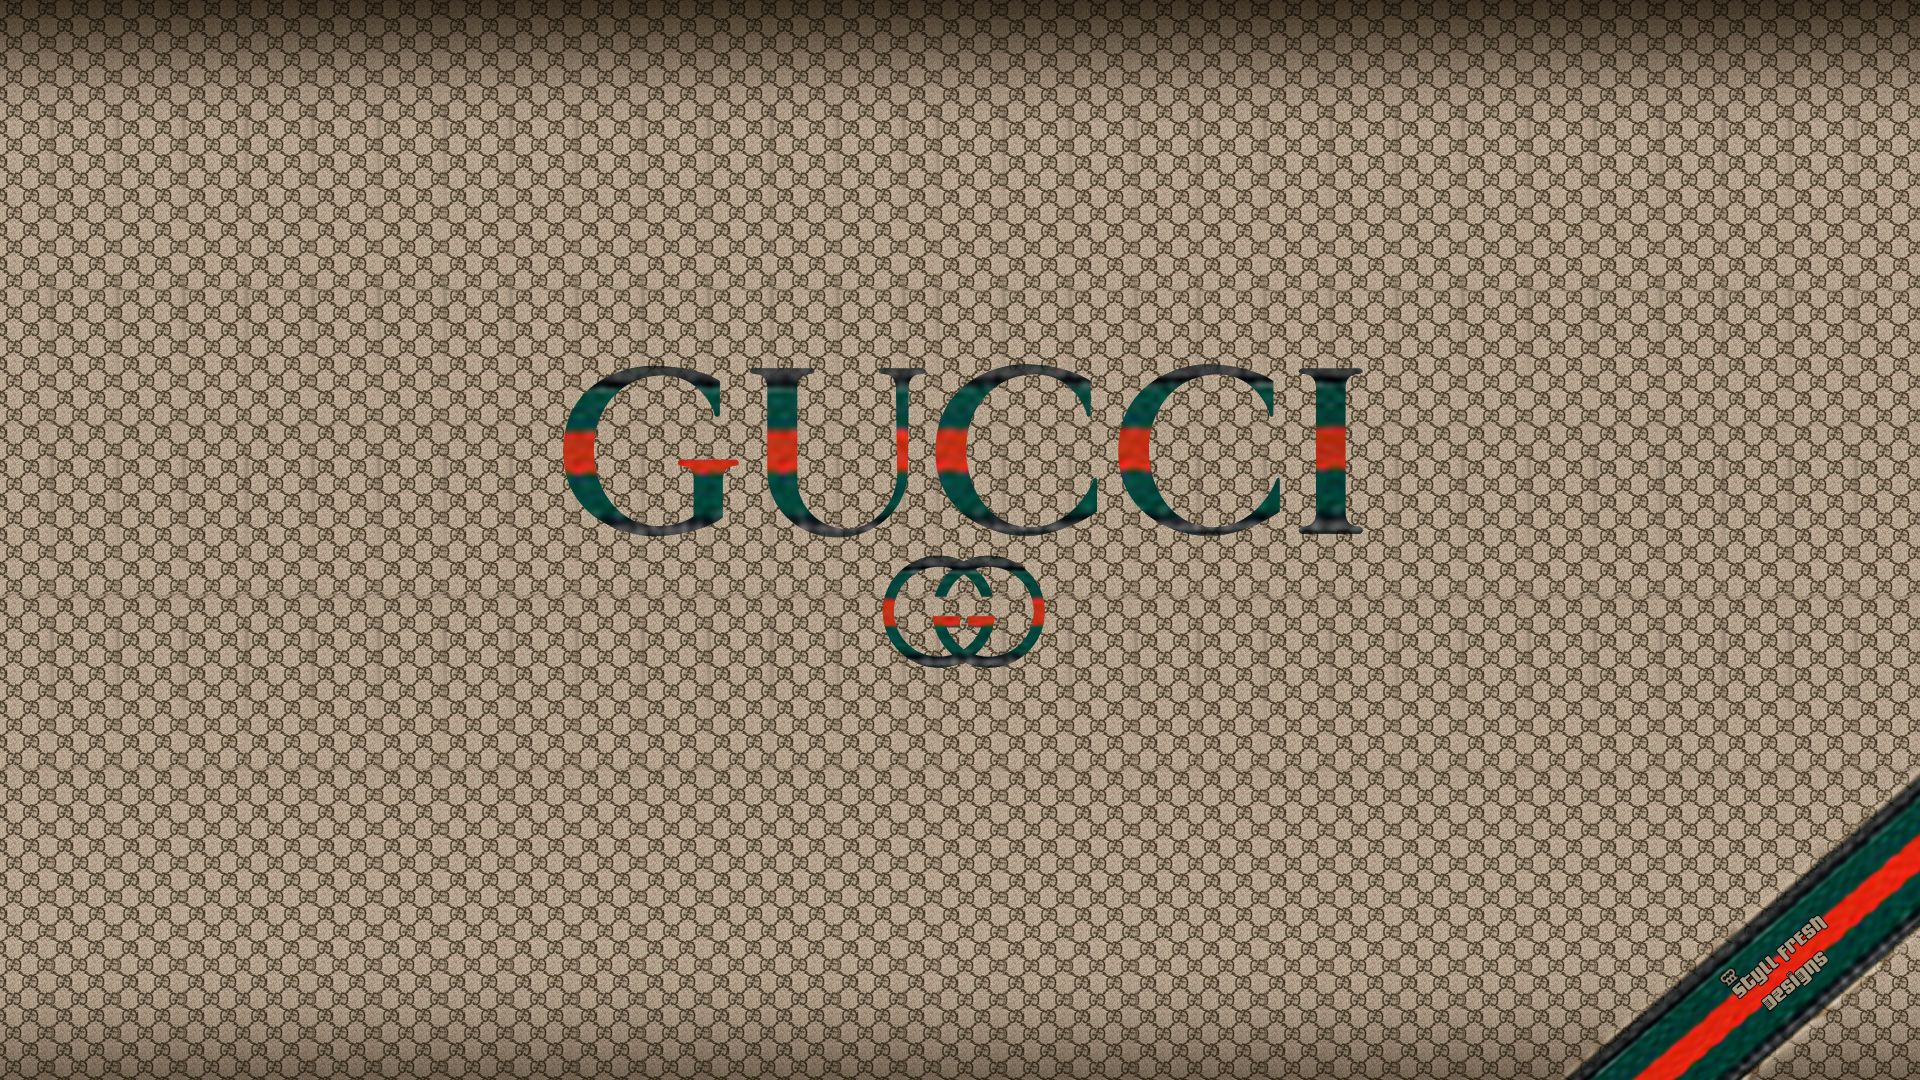 Gucci brand clothing wallpaper and .zastavki.com